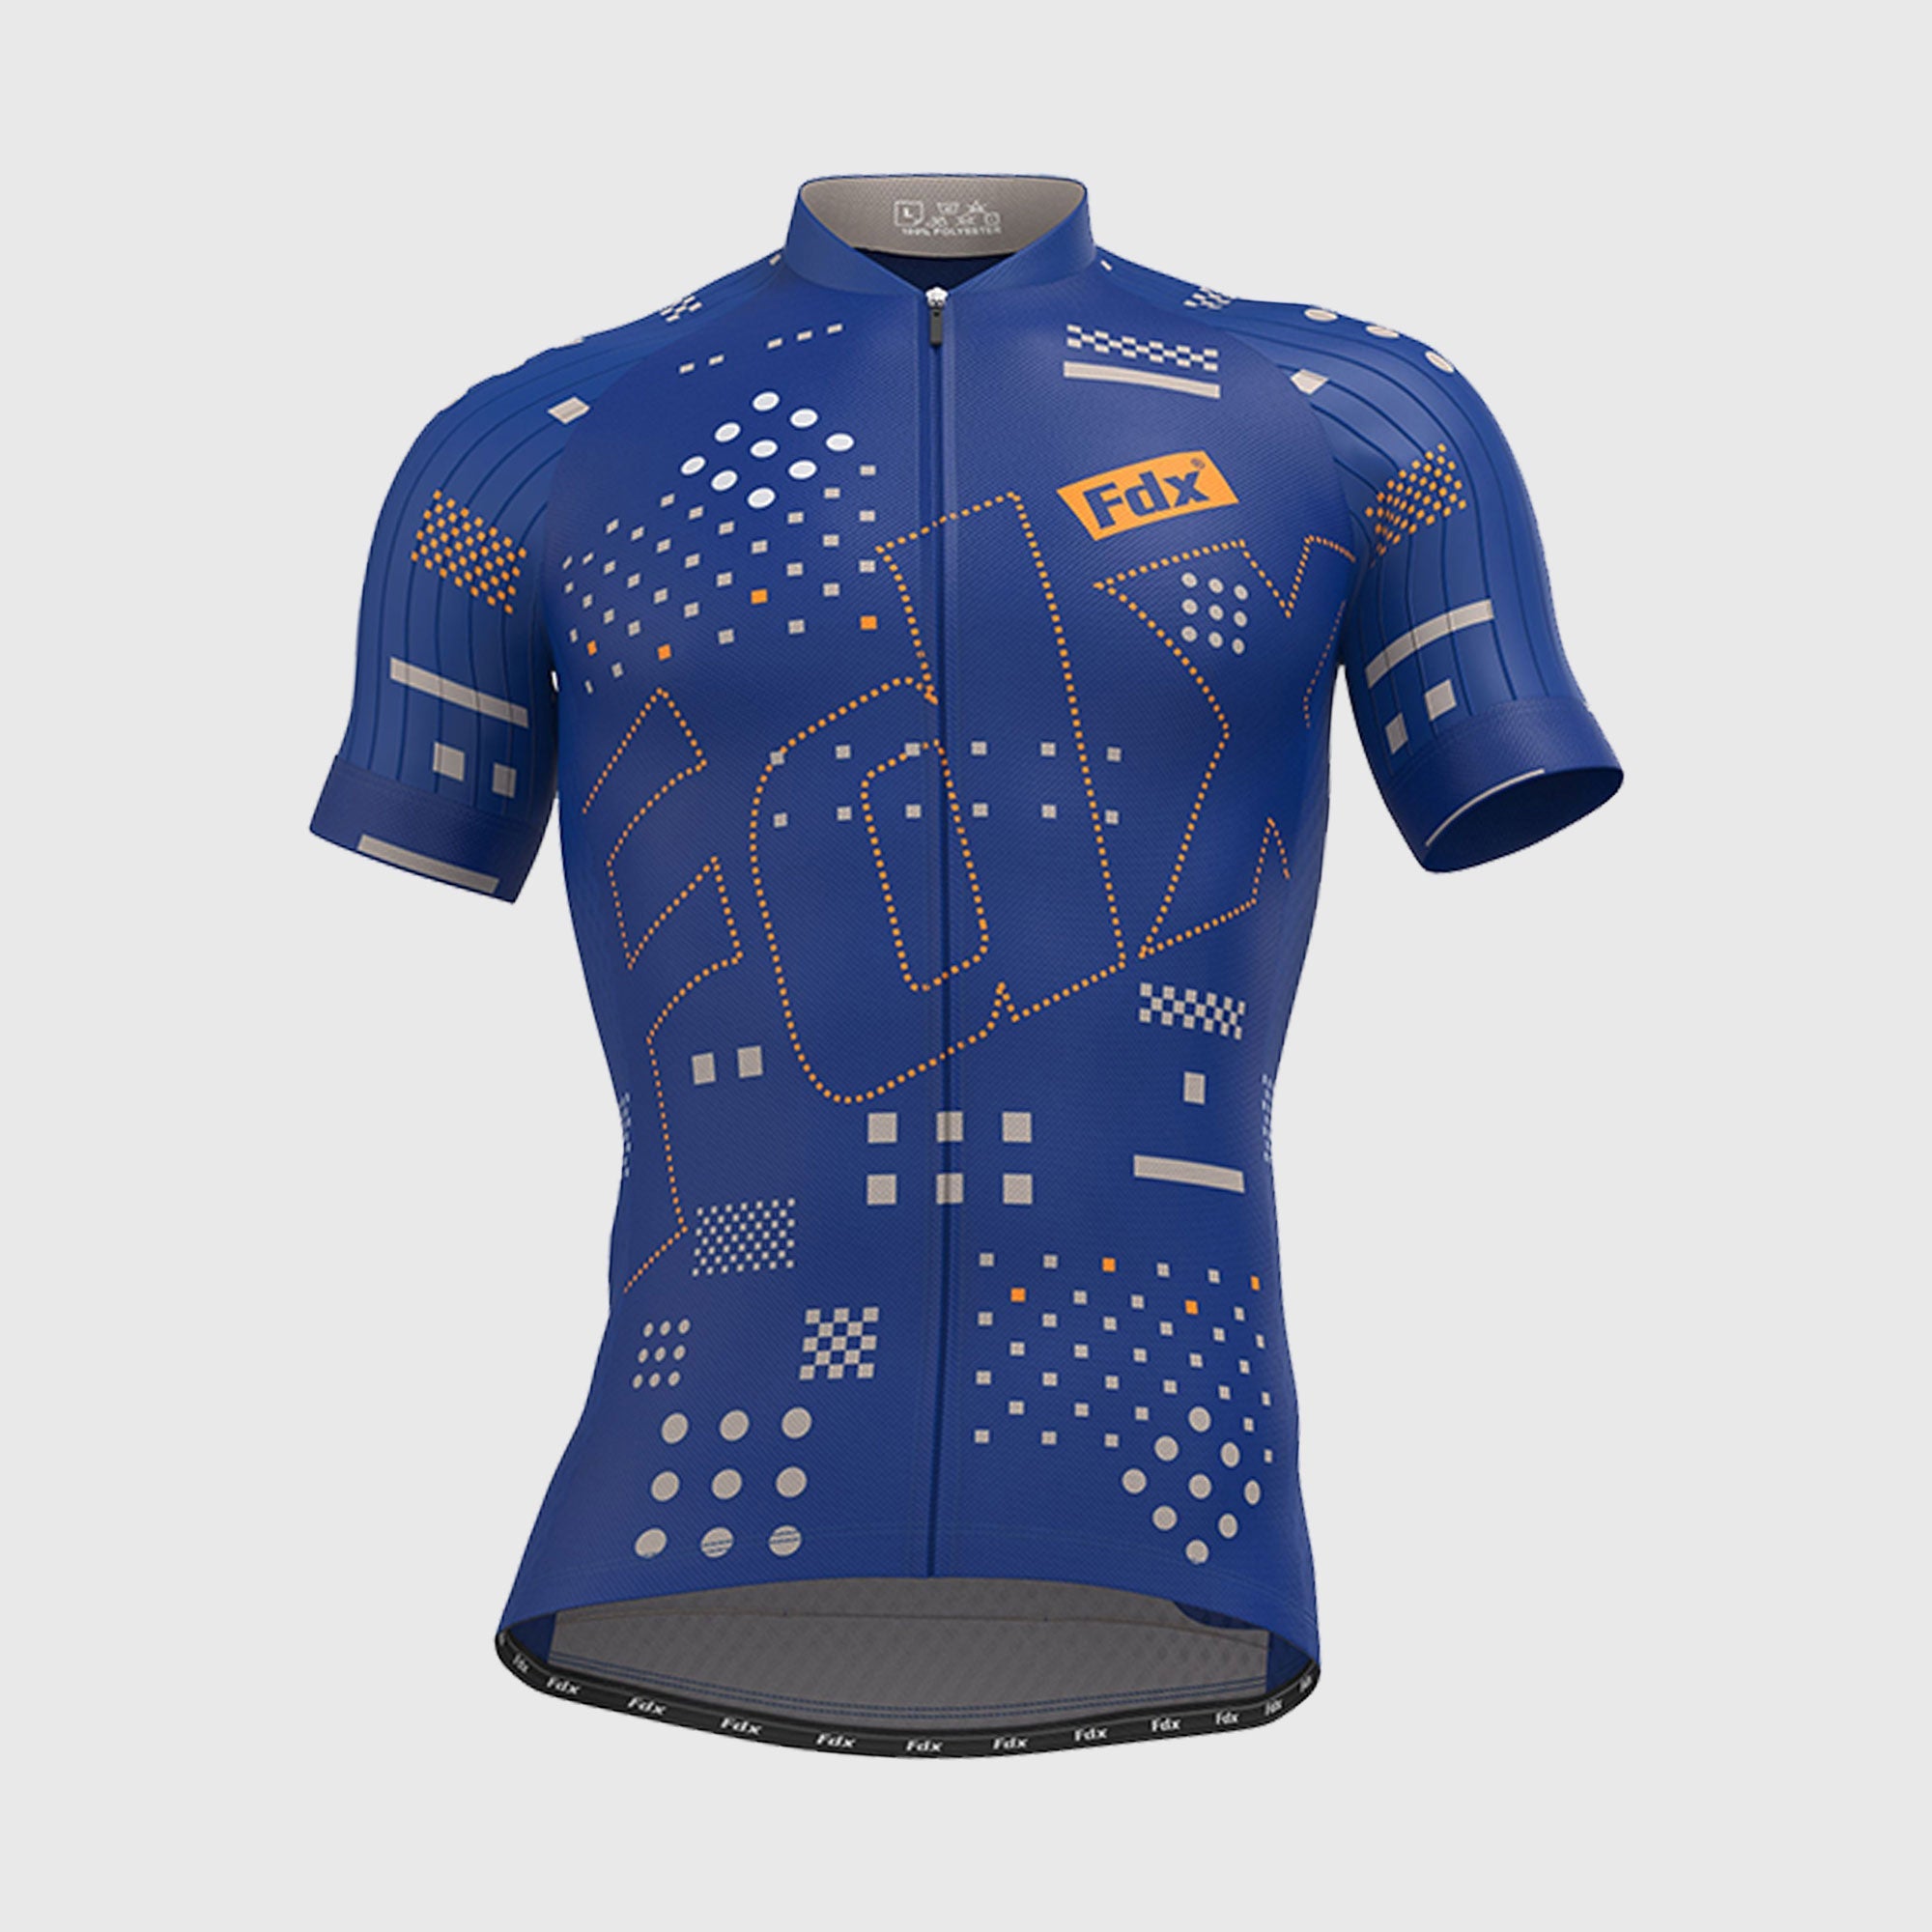 Fdx All Day Blue Men's Short Sleeve Summer Cycling Jersey